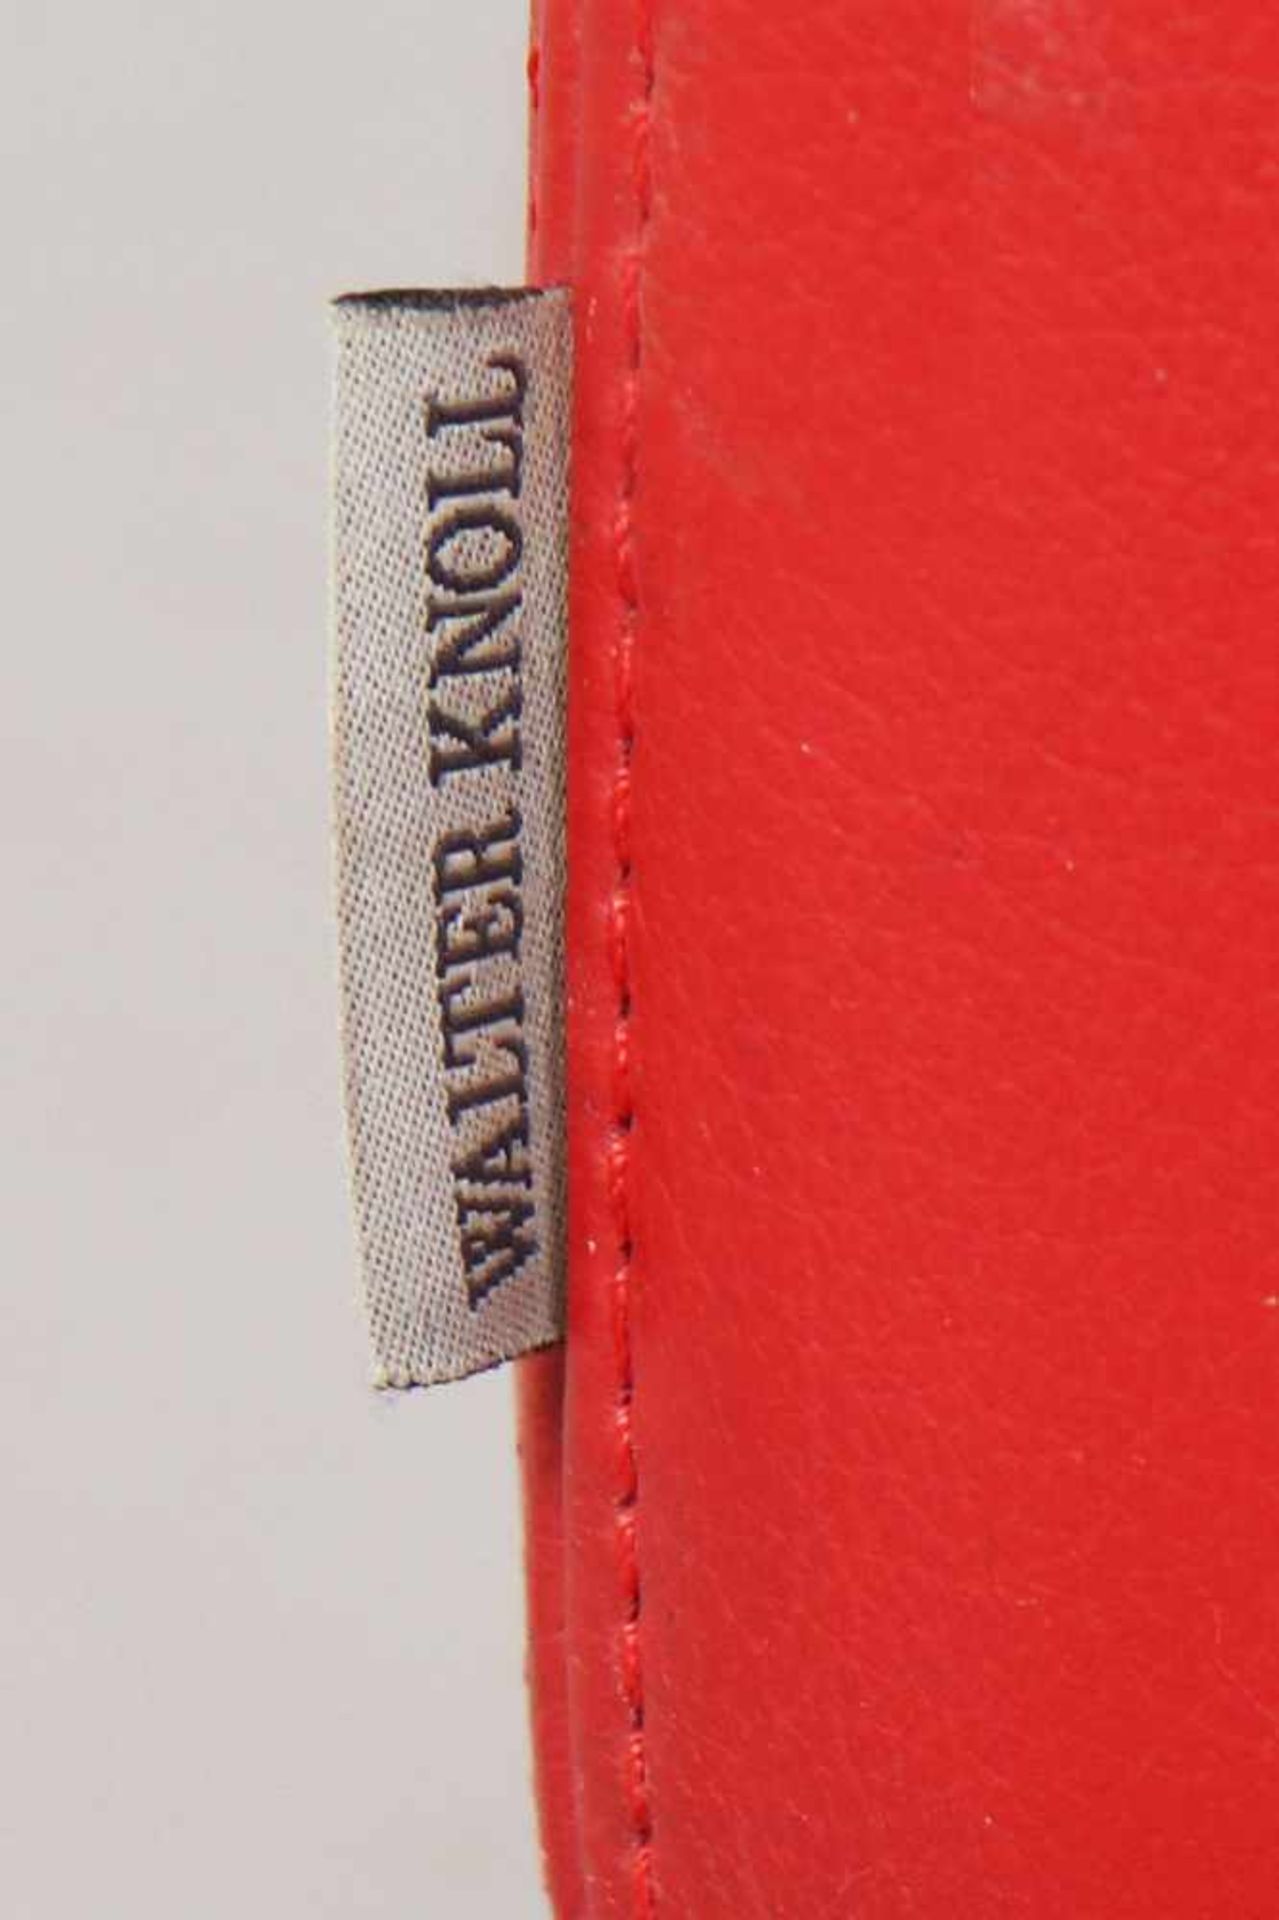 2 WALTER KNOLL Armlehnsessel allseitig gepolstert/rot beledert, strenge, eckige Form im Bauhaus- - Bild 4 aus 4